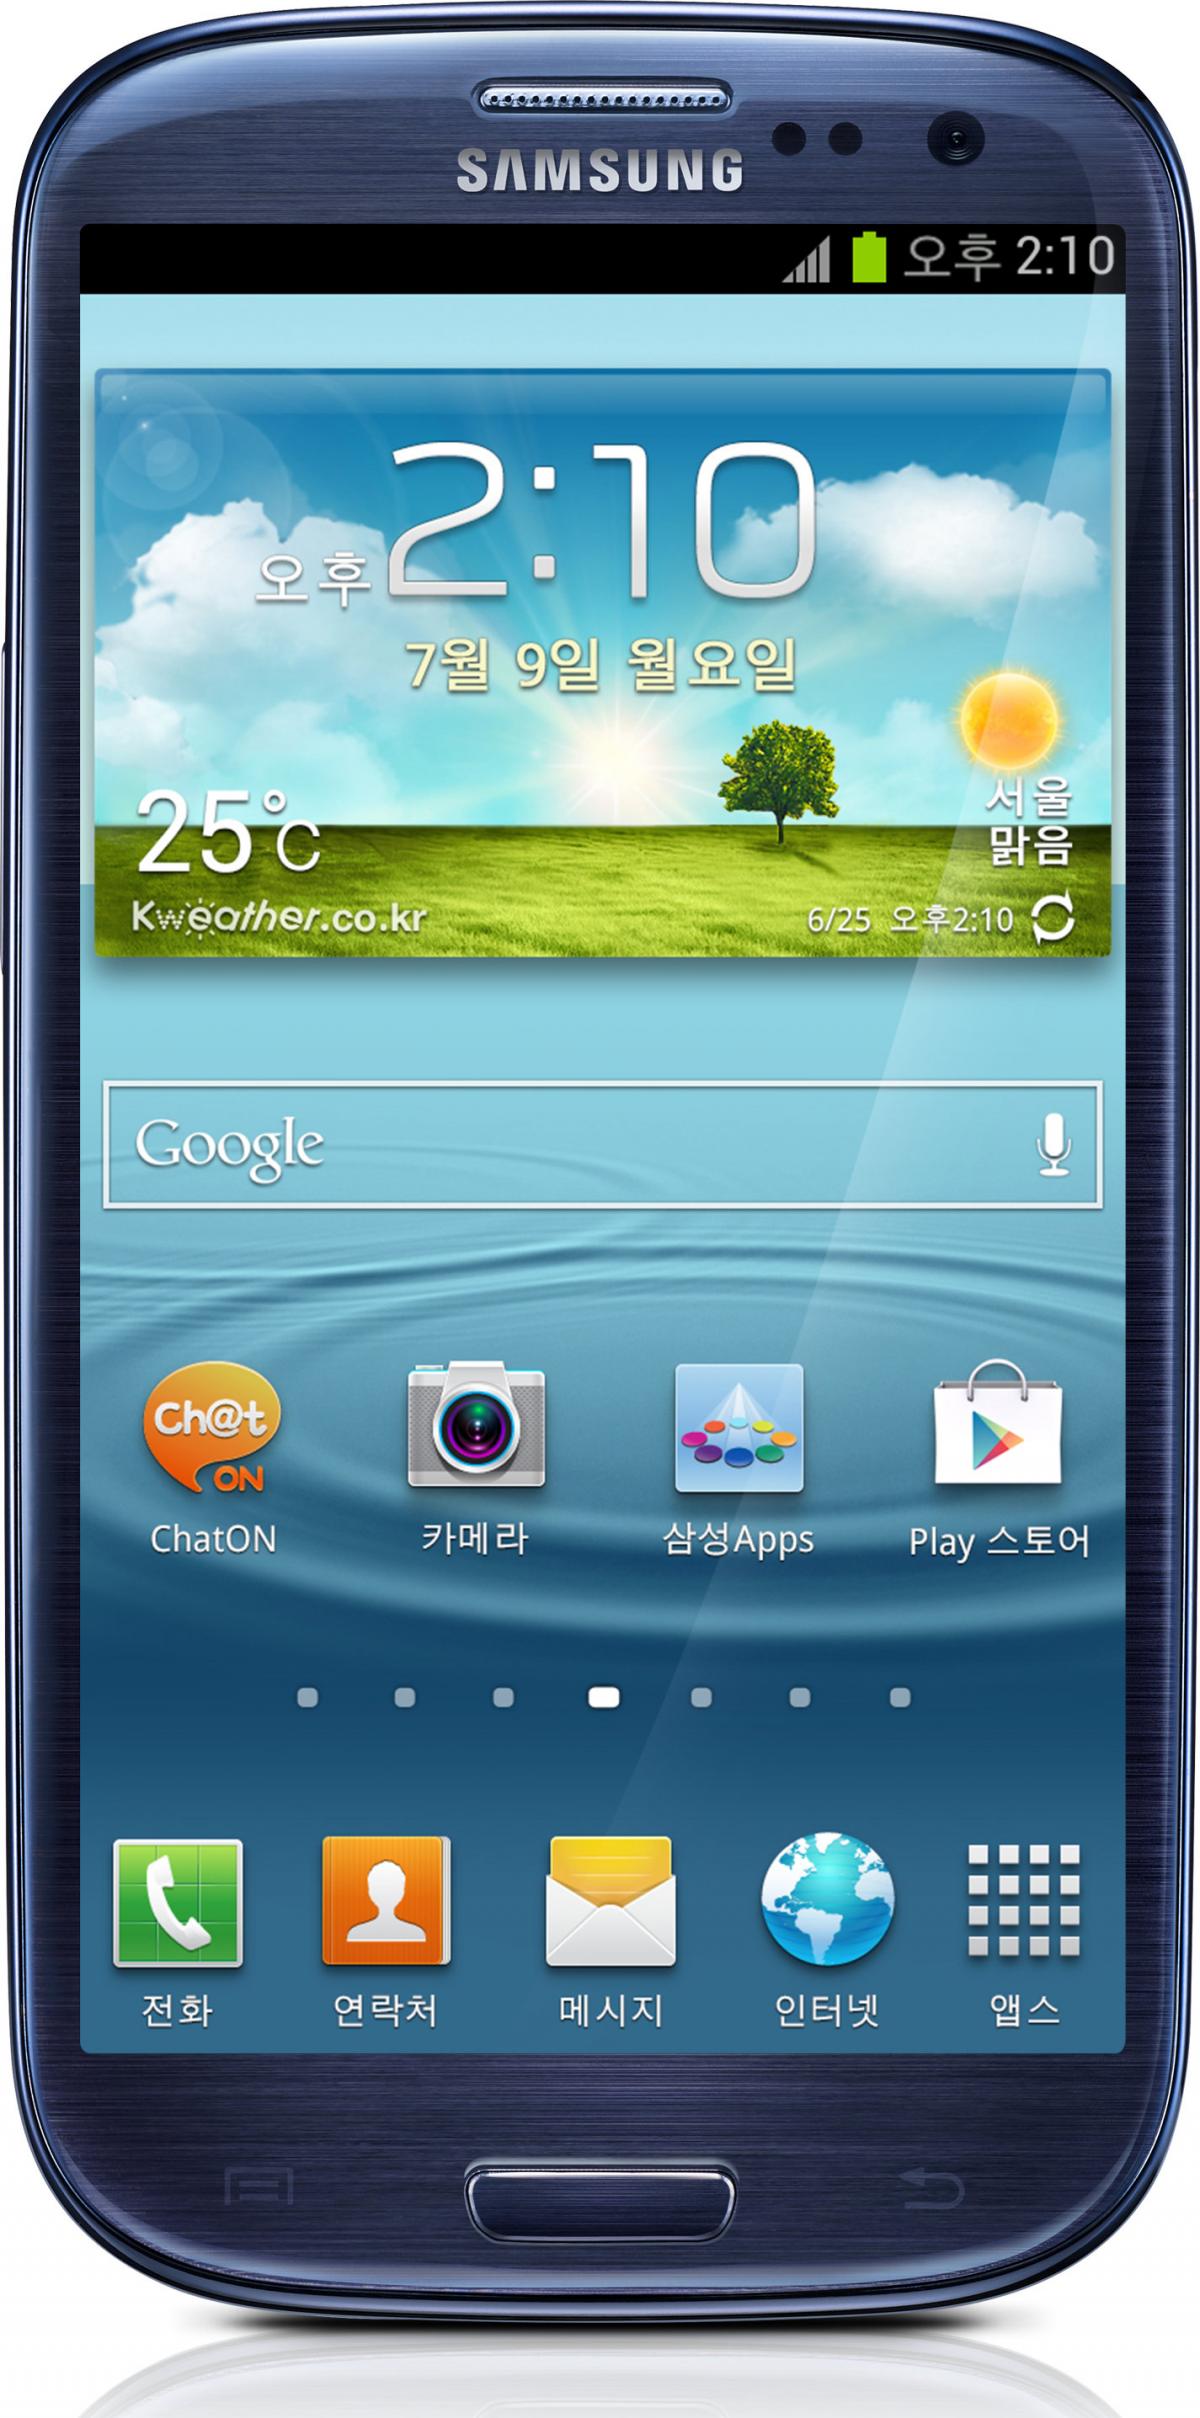 Galaxy S 3 LTE (Korea KTF) SHV-E210K